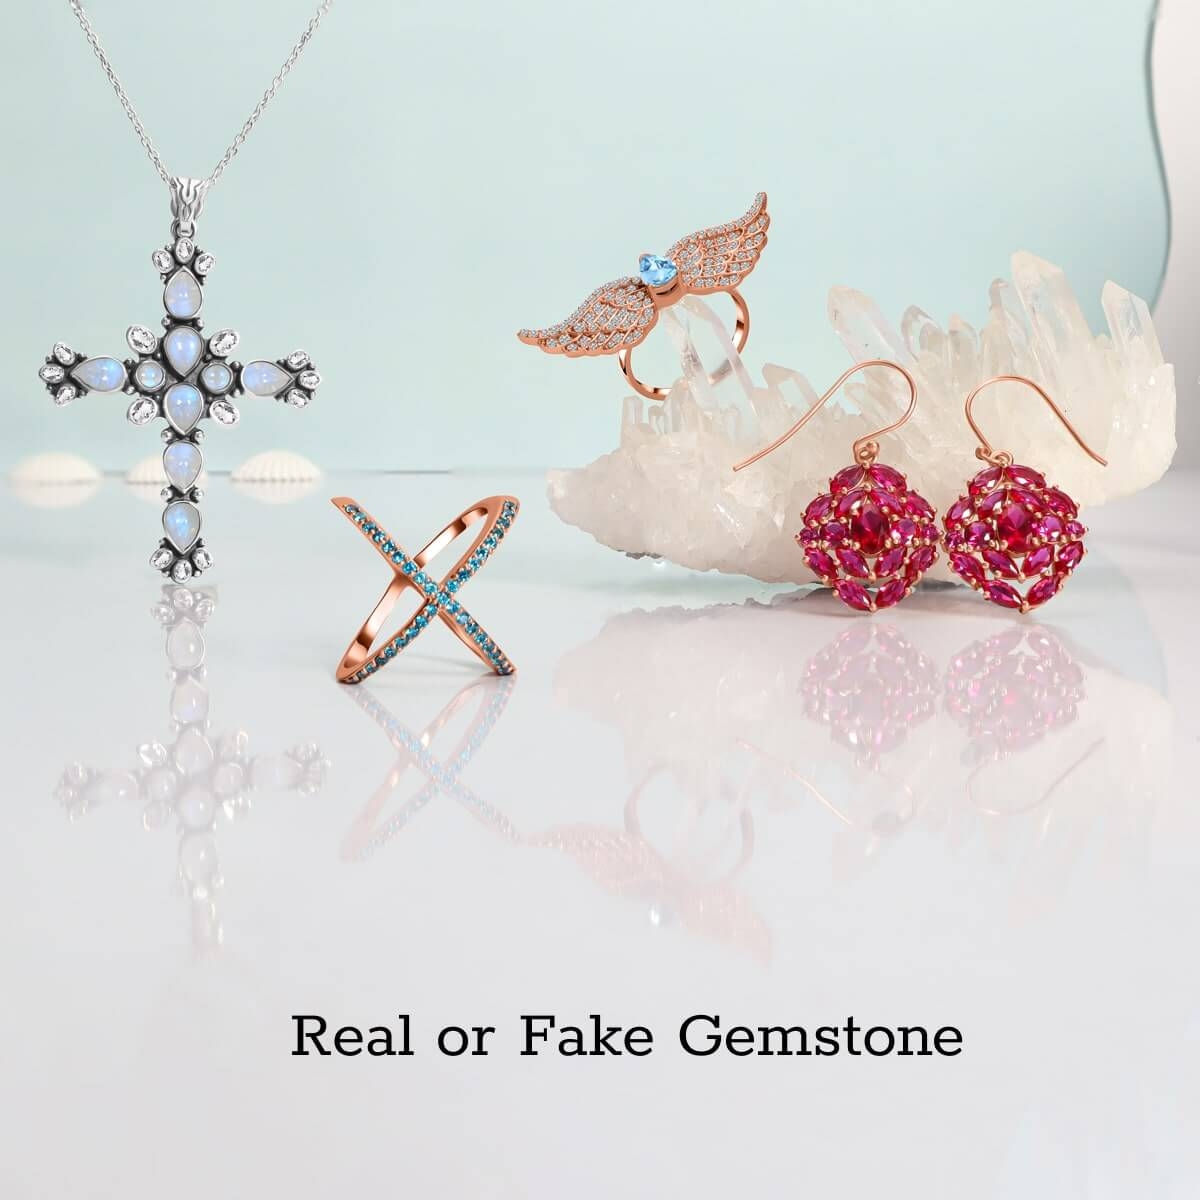 Identify the Gemstone Real or Fake